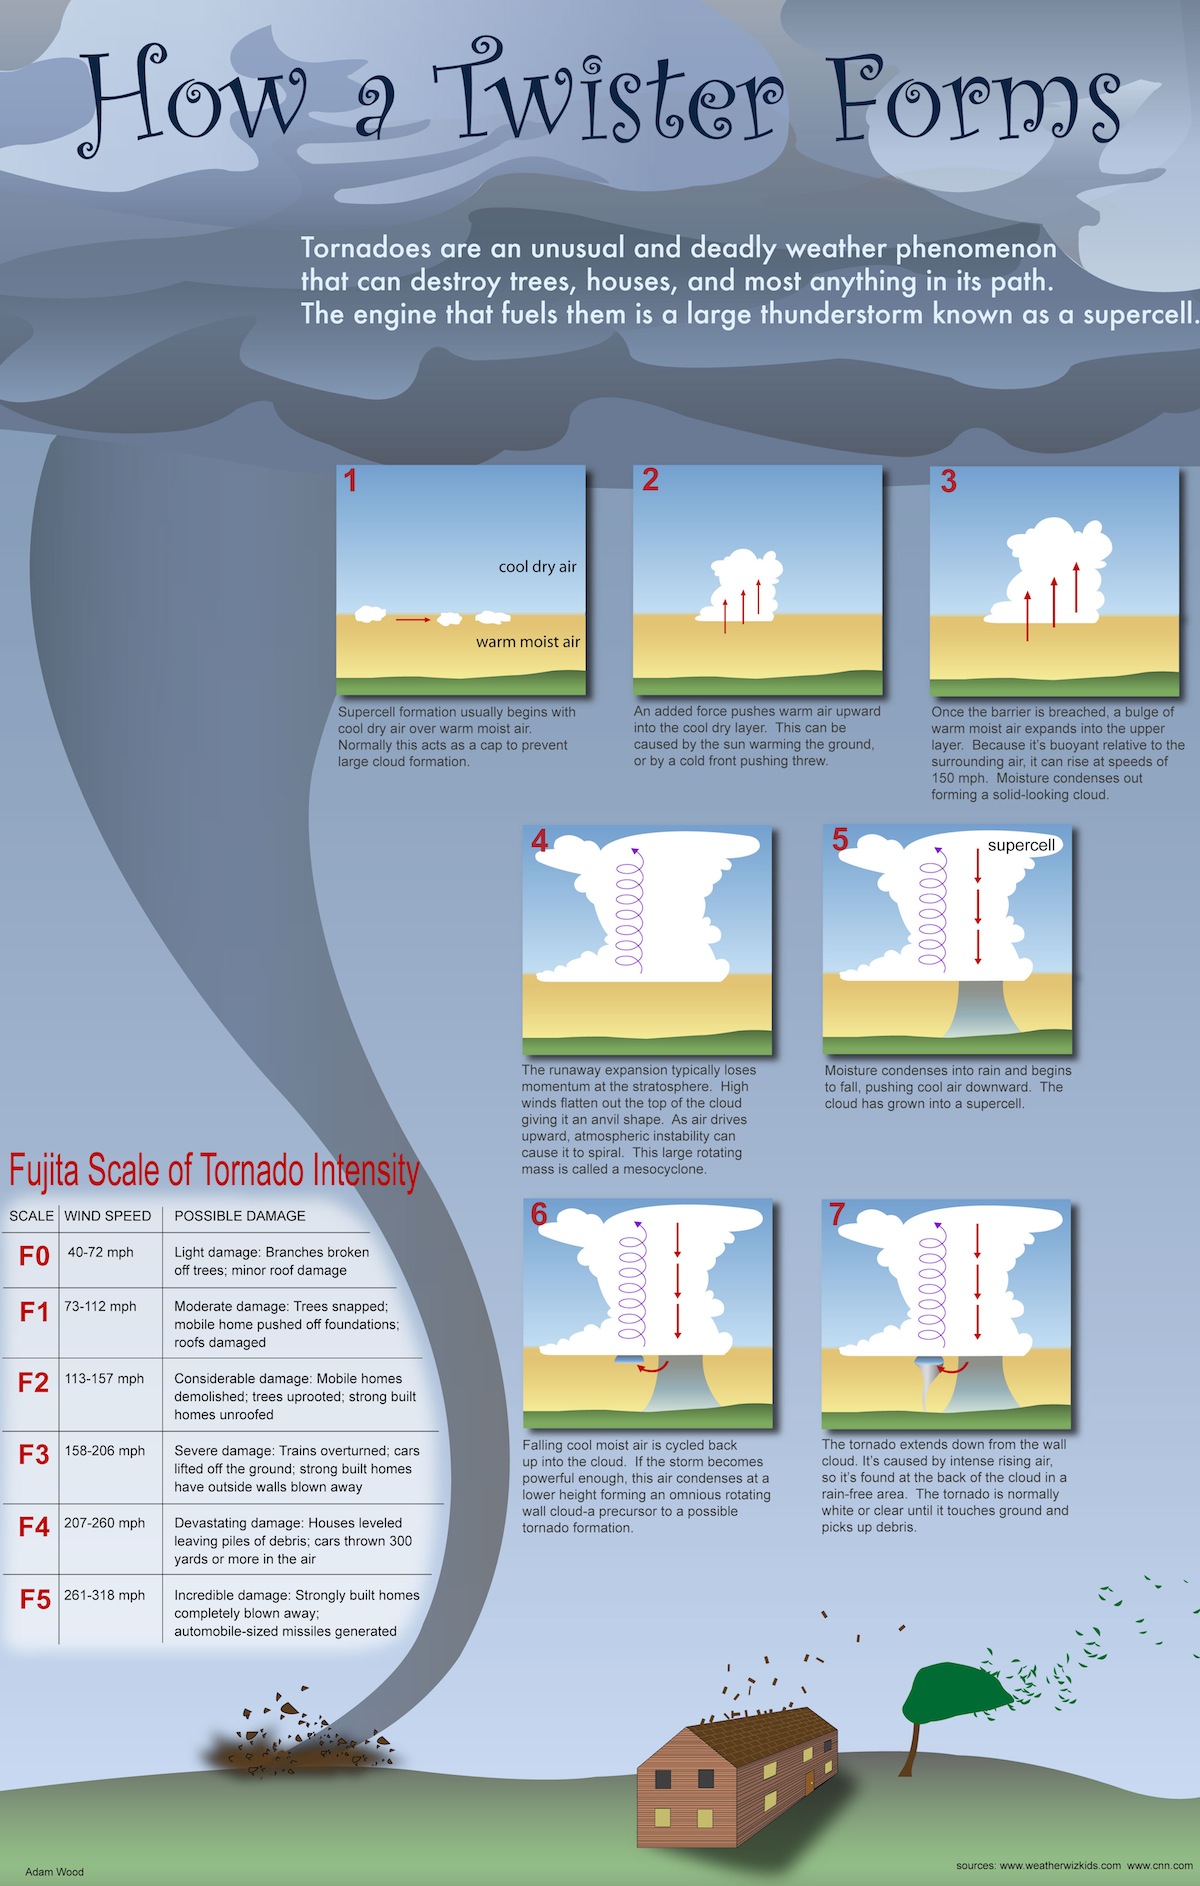 How do tornadoes form? – 34 Kiwis